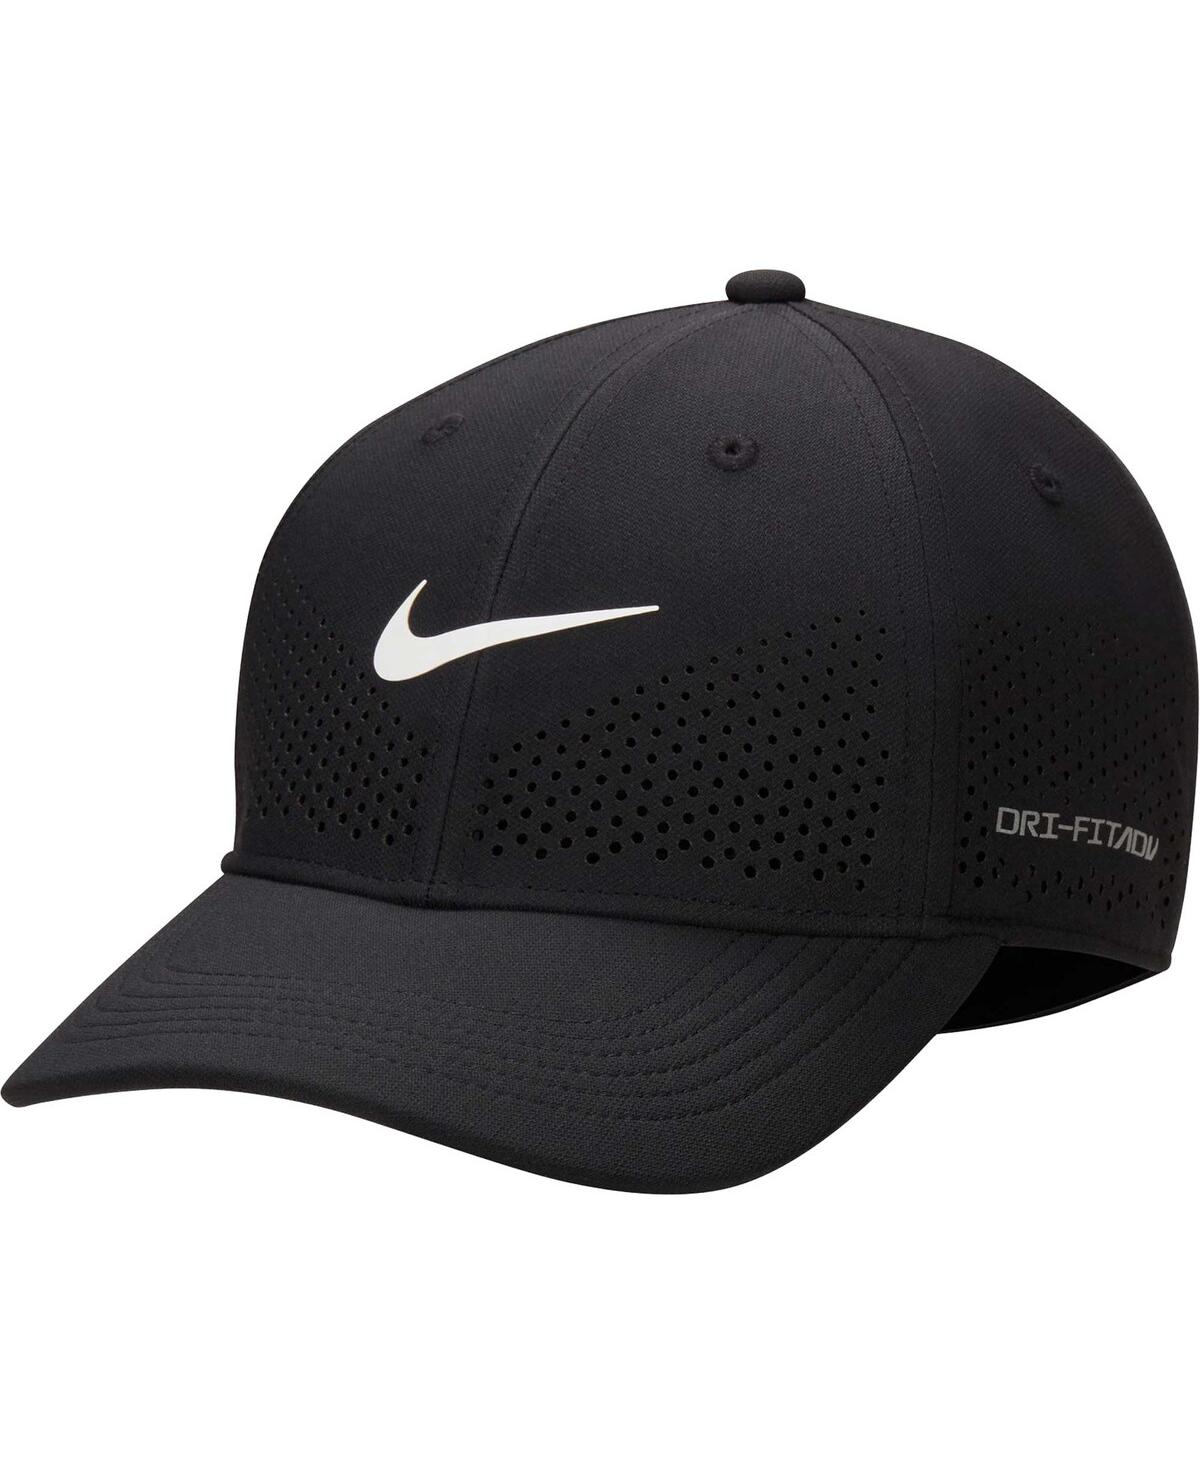 Men's Nike Black Club Performance Adjustable Hat - Black